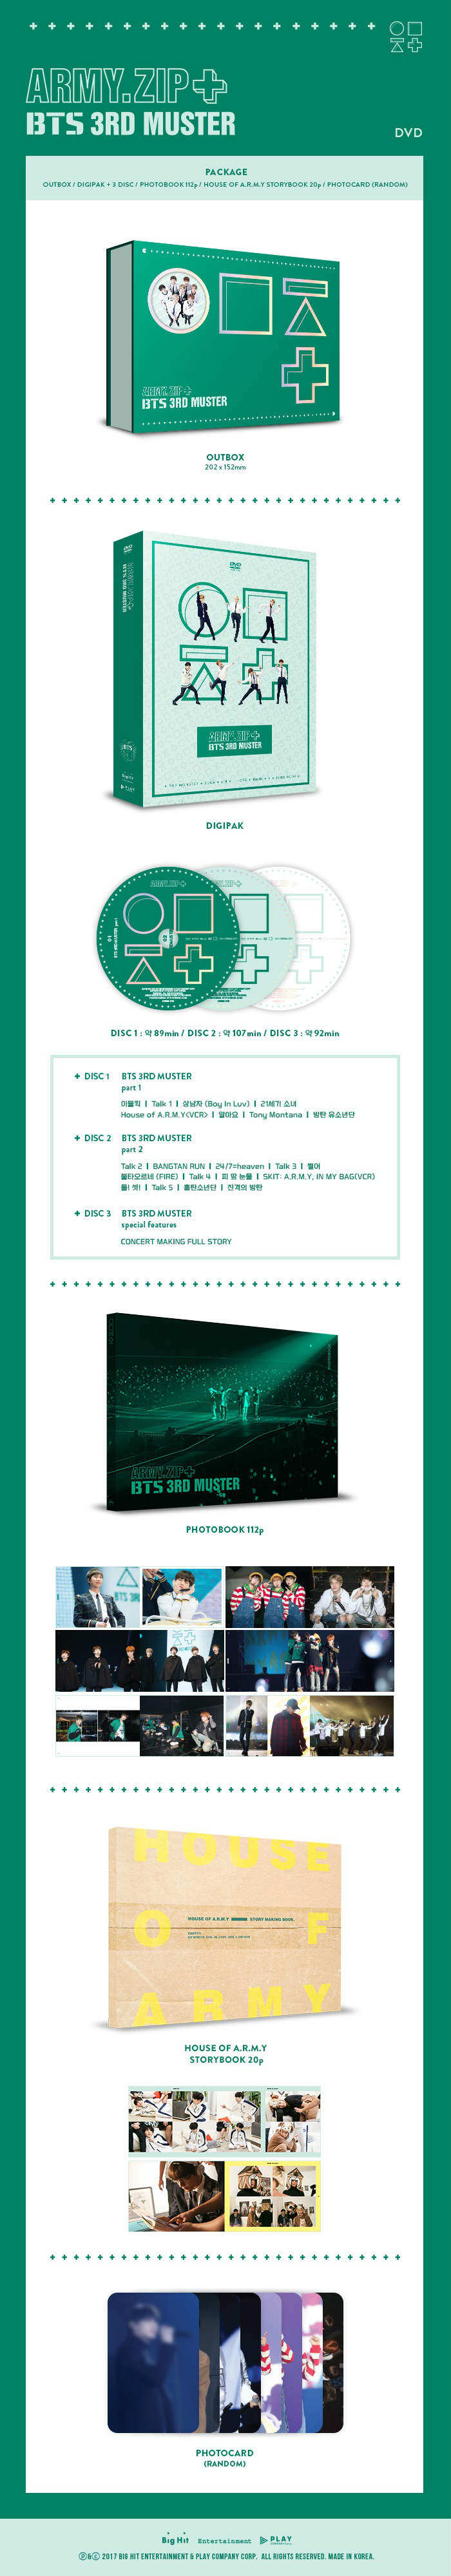 防弾少年団(BTS) - BTS 3rd Muster ARMY.ZIP+ DVD | Music Korea 